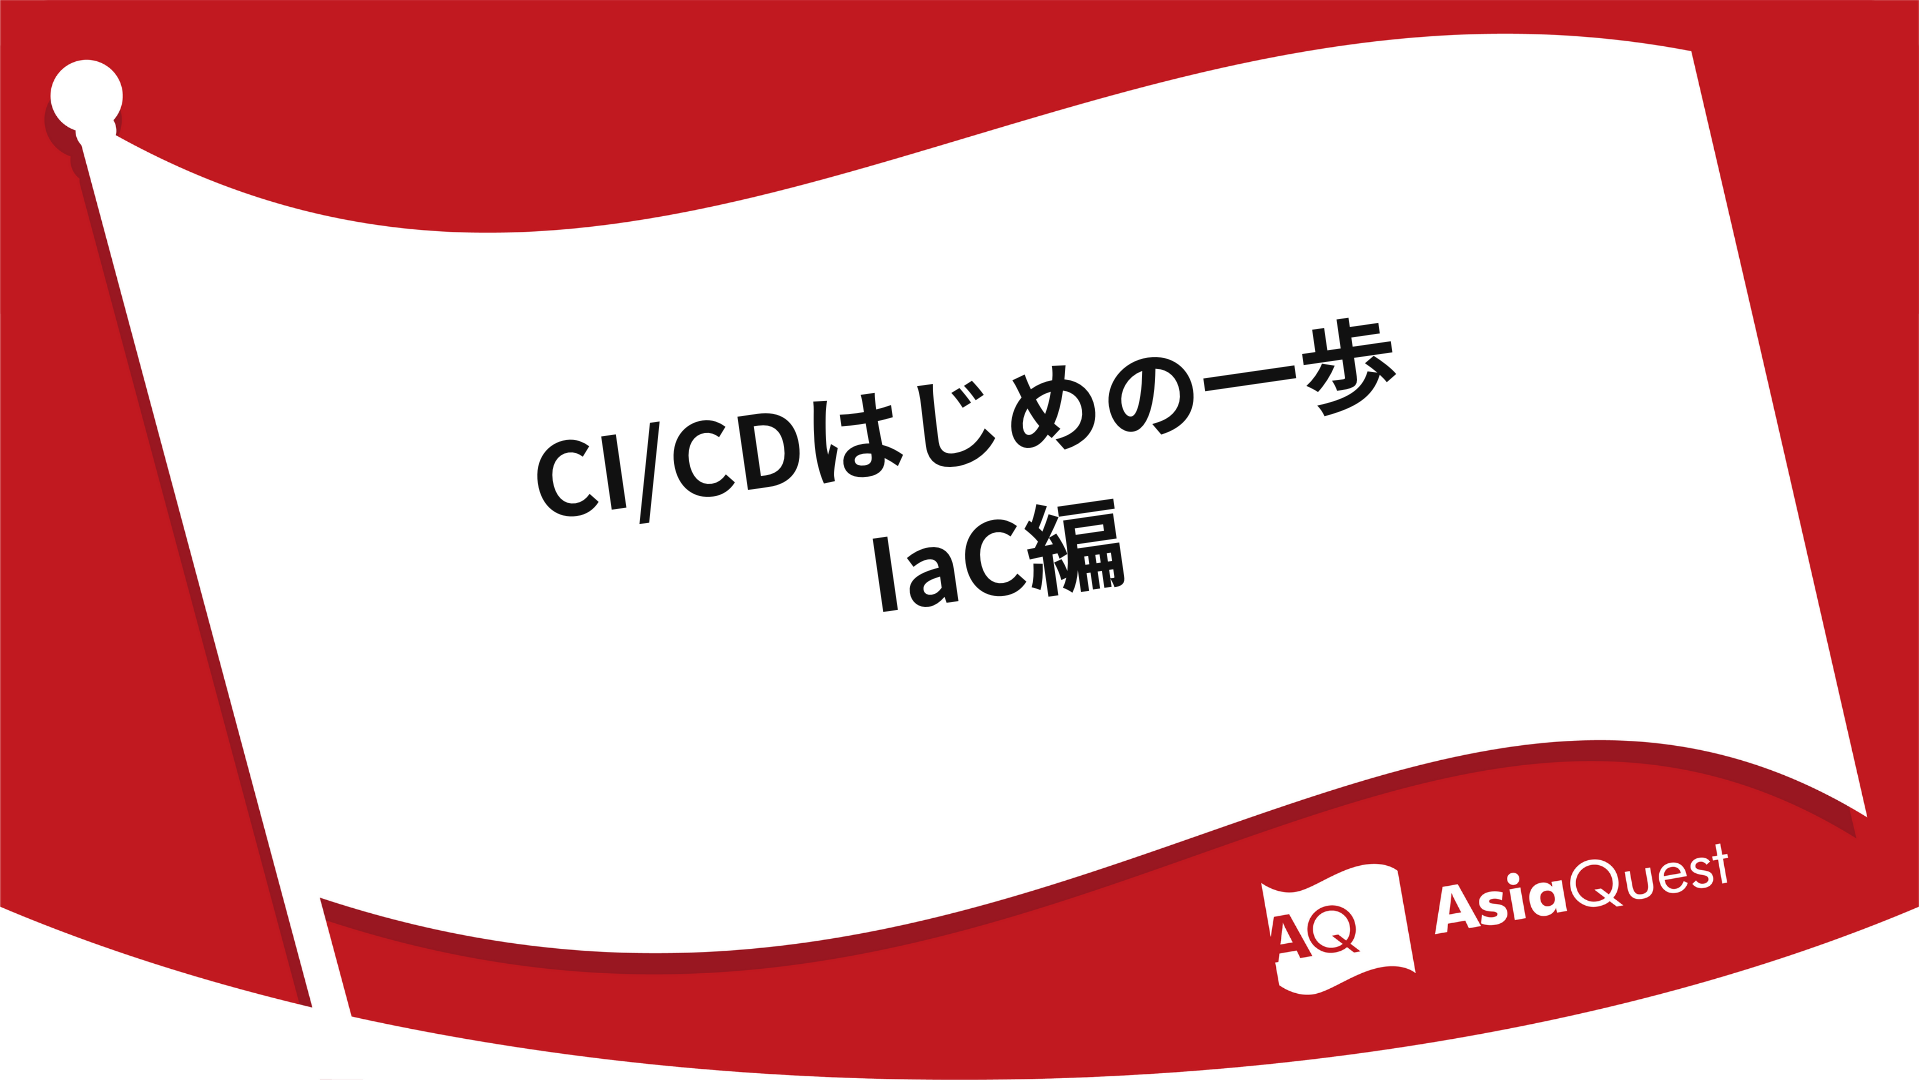 CI/CDはじめの一歩 IaC編